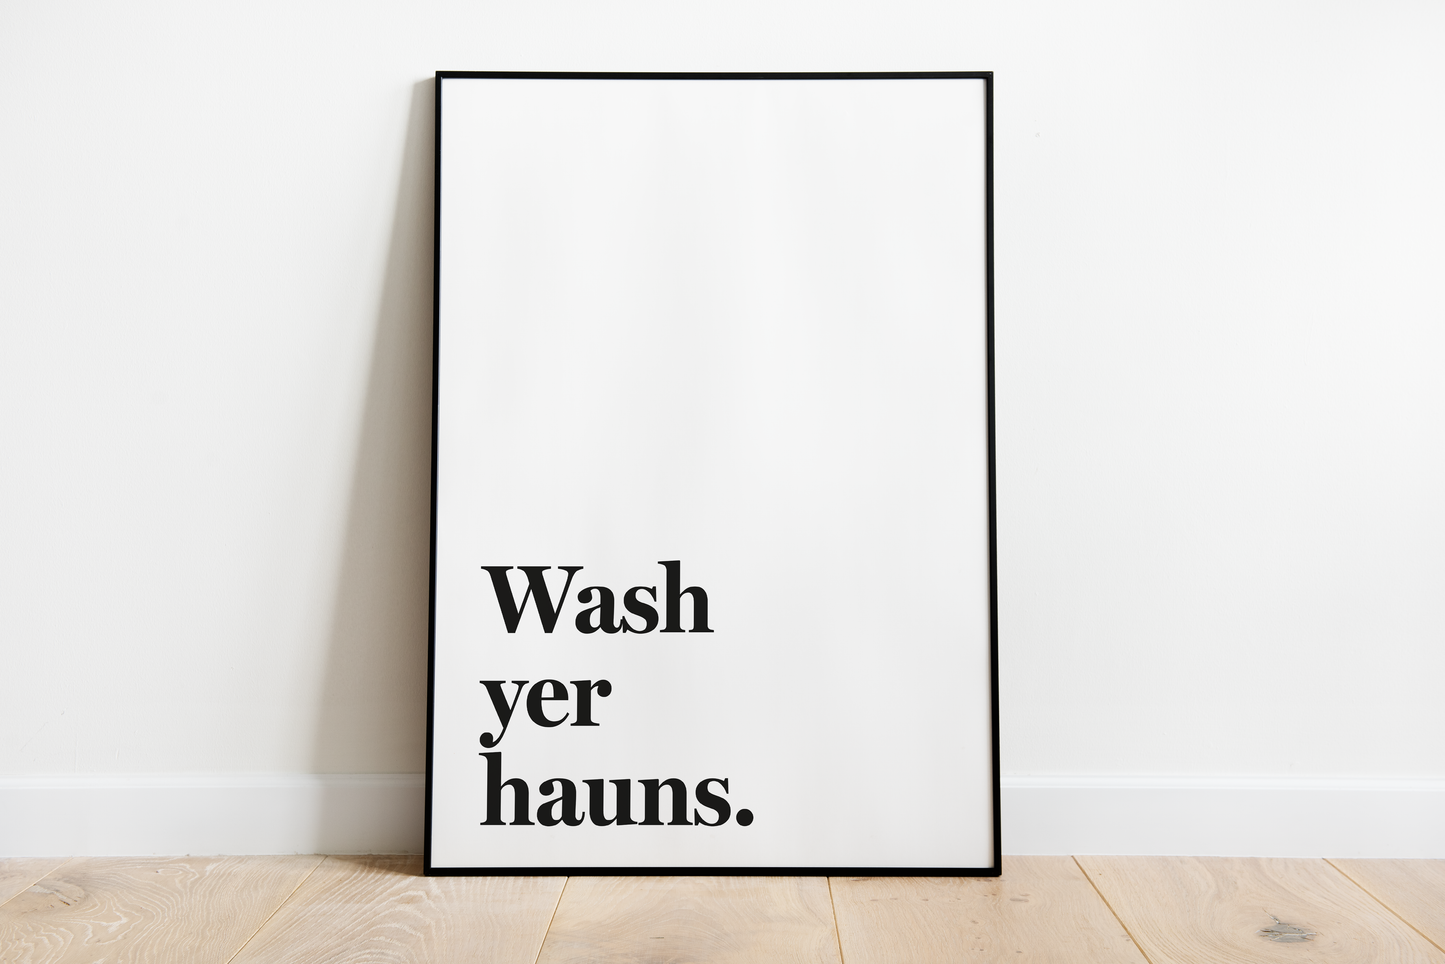 "Wash yer hauns" (Colourful)